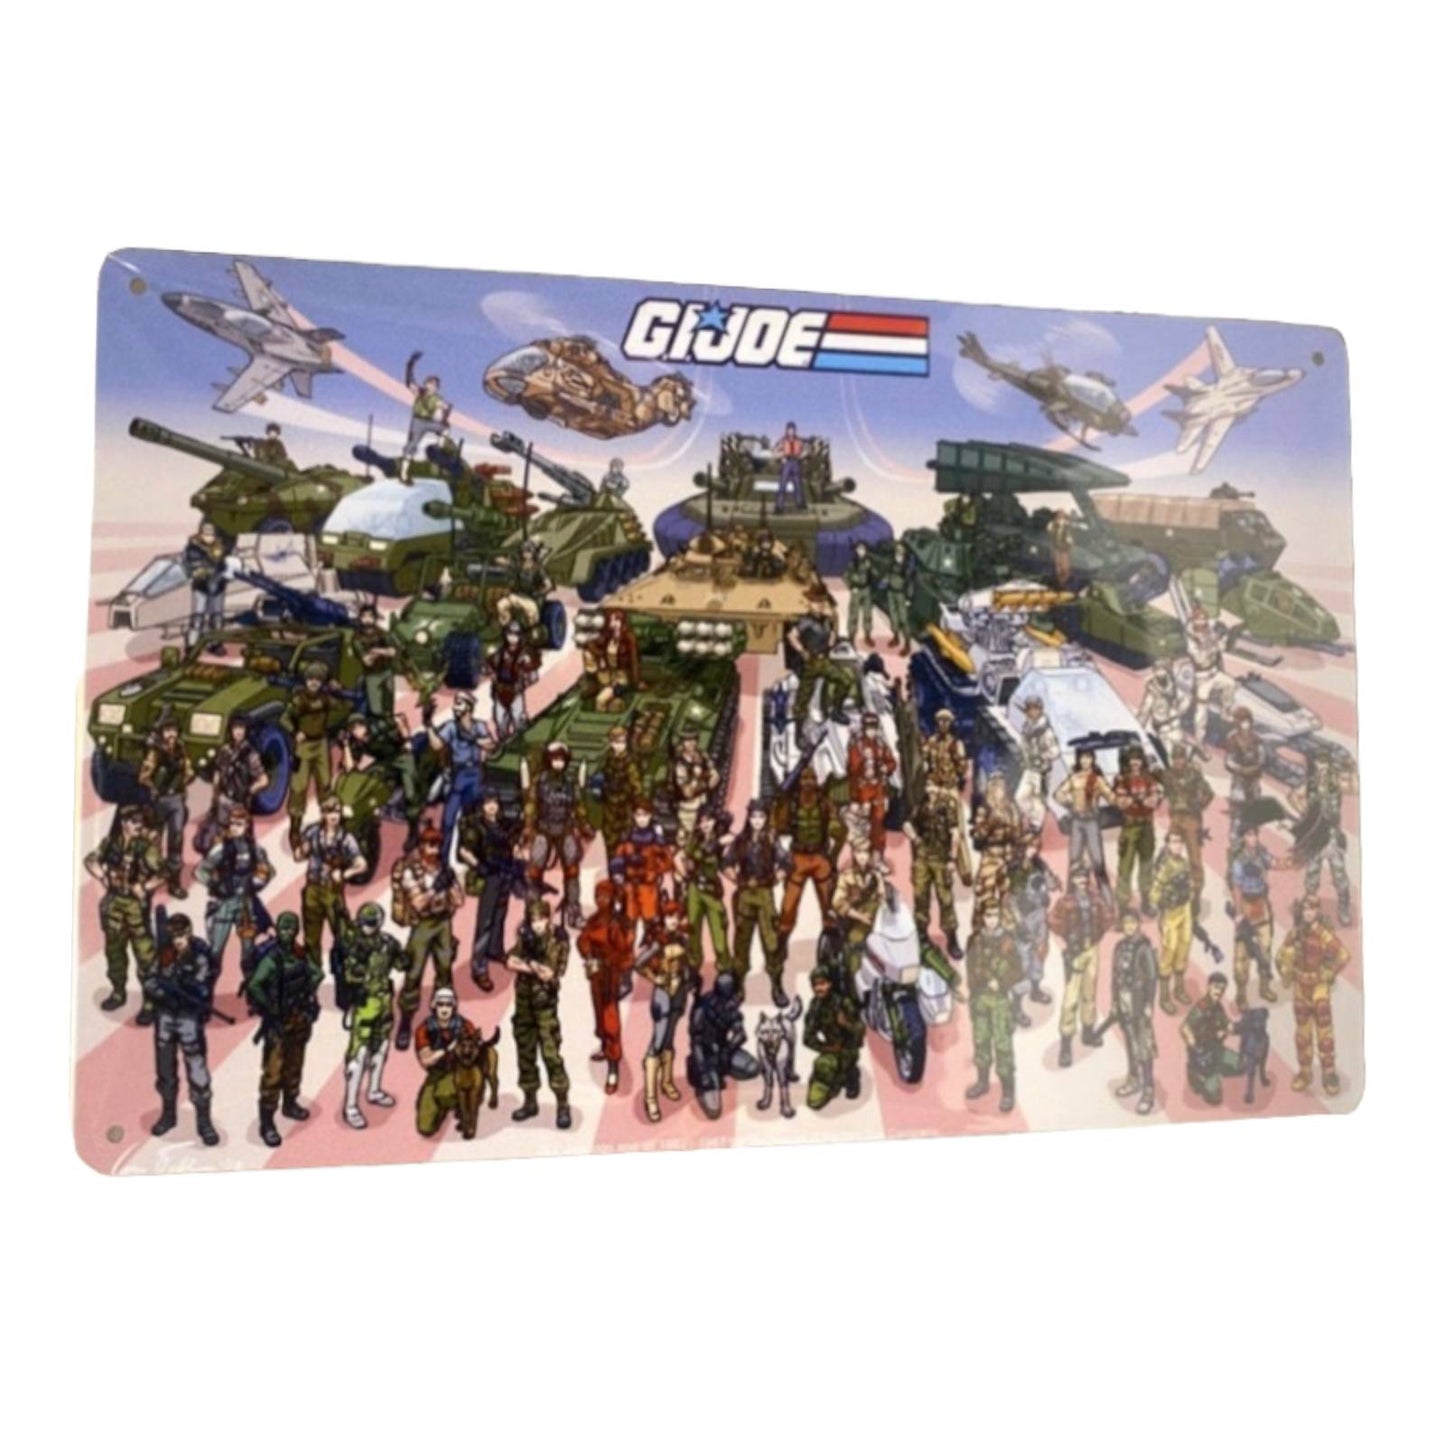 G.I. Joe Character Group Poster Metal Tin Sign 8"x12"